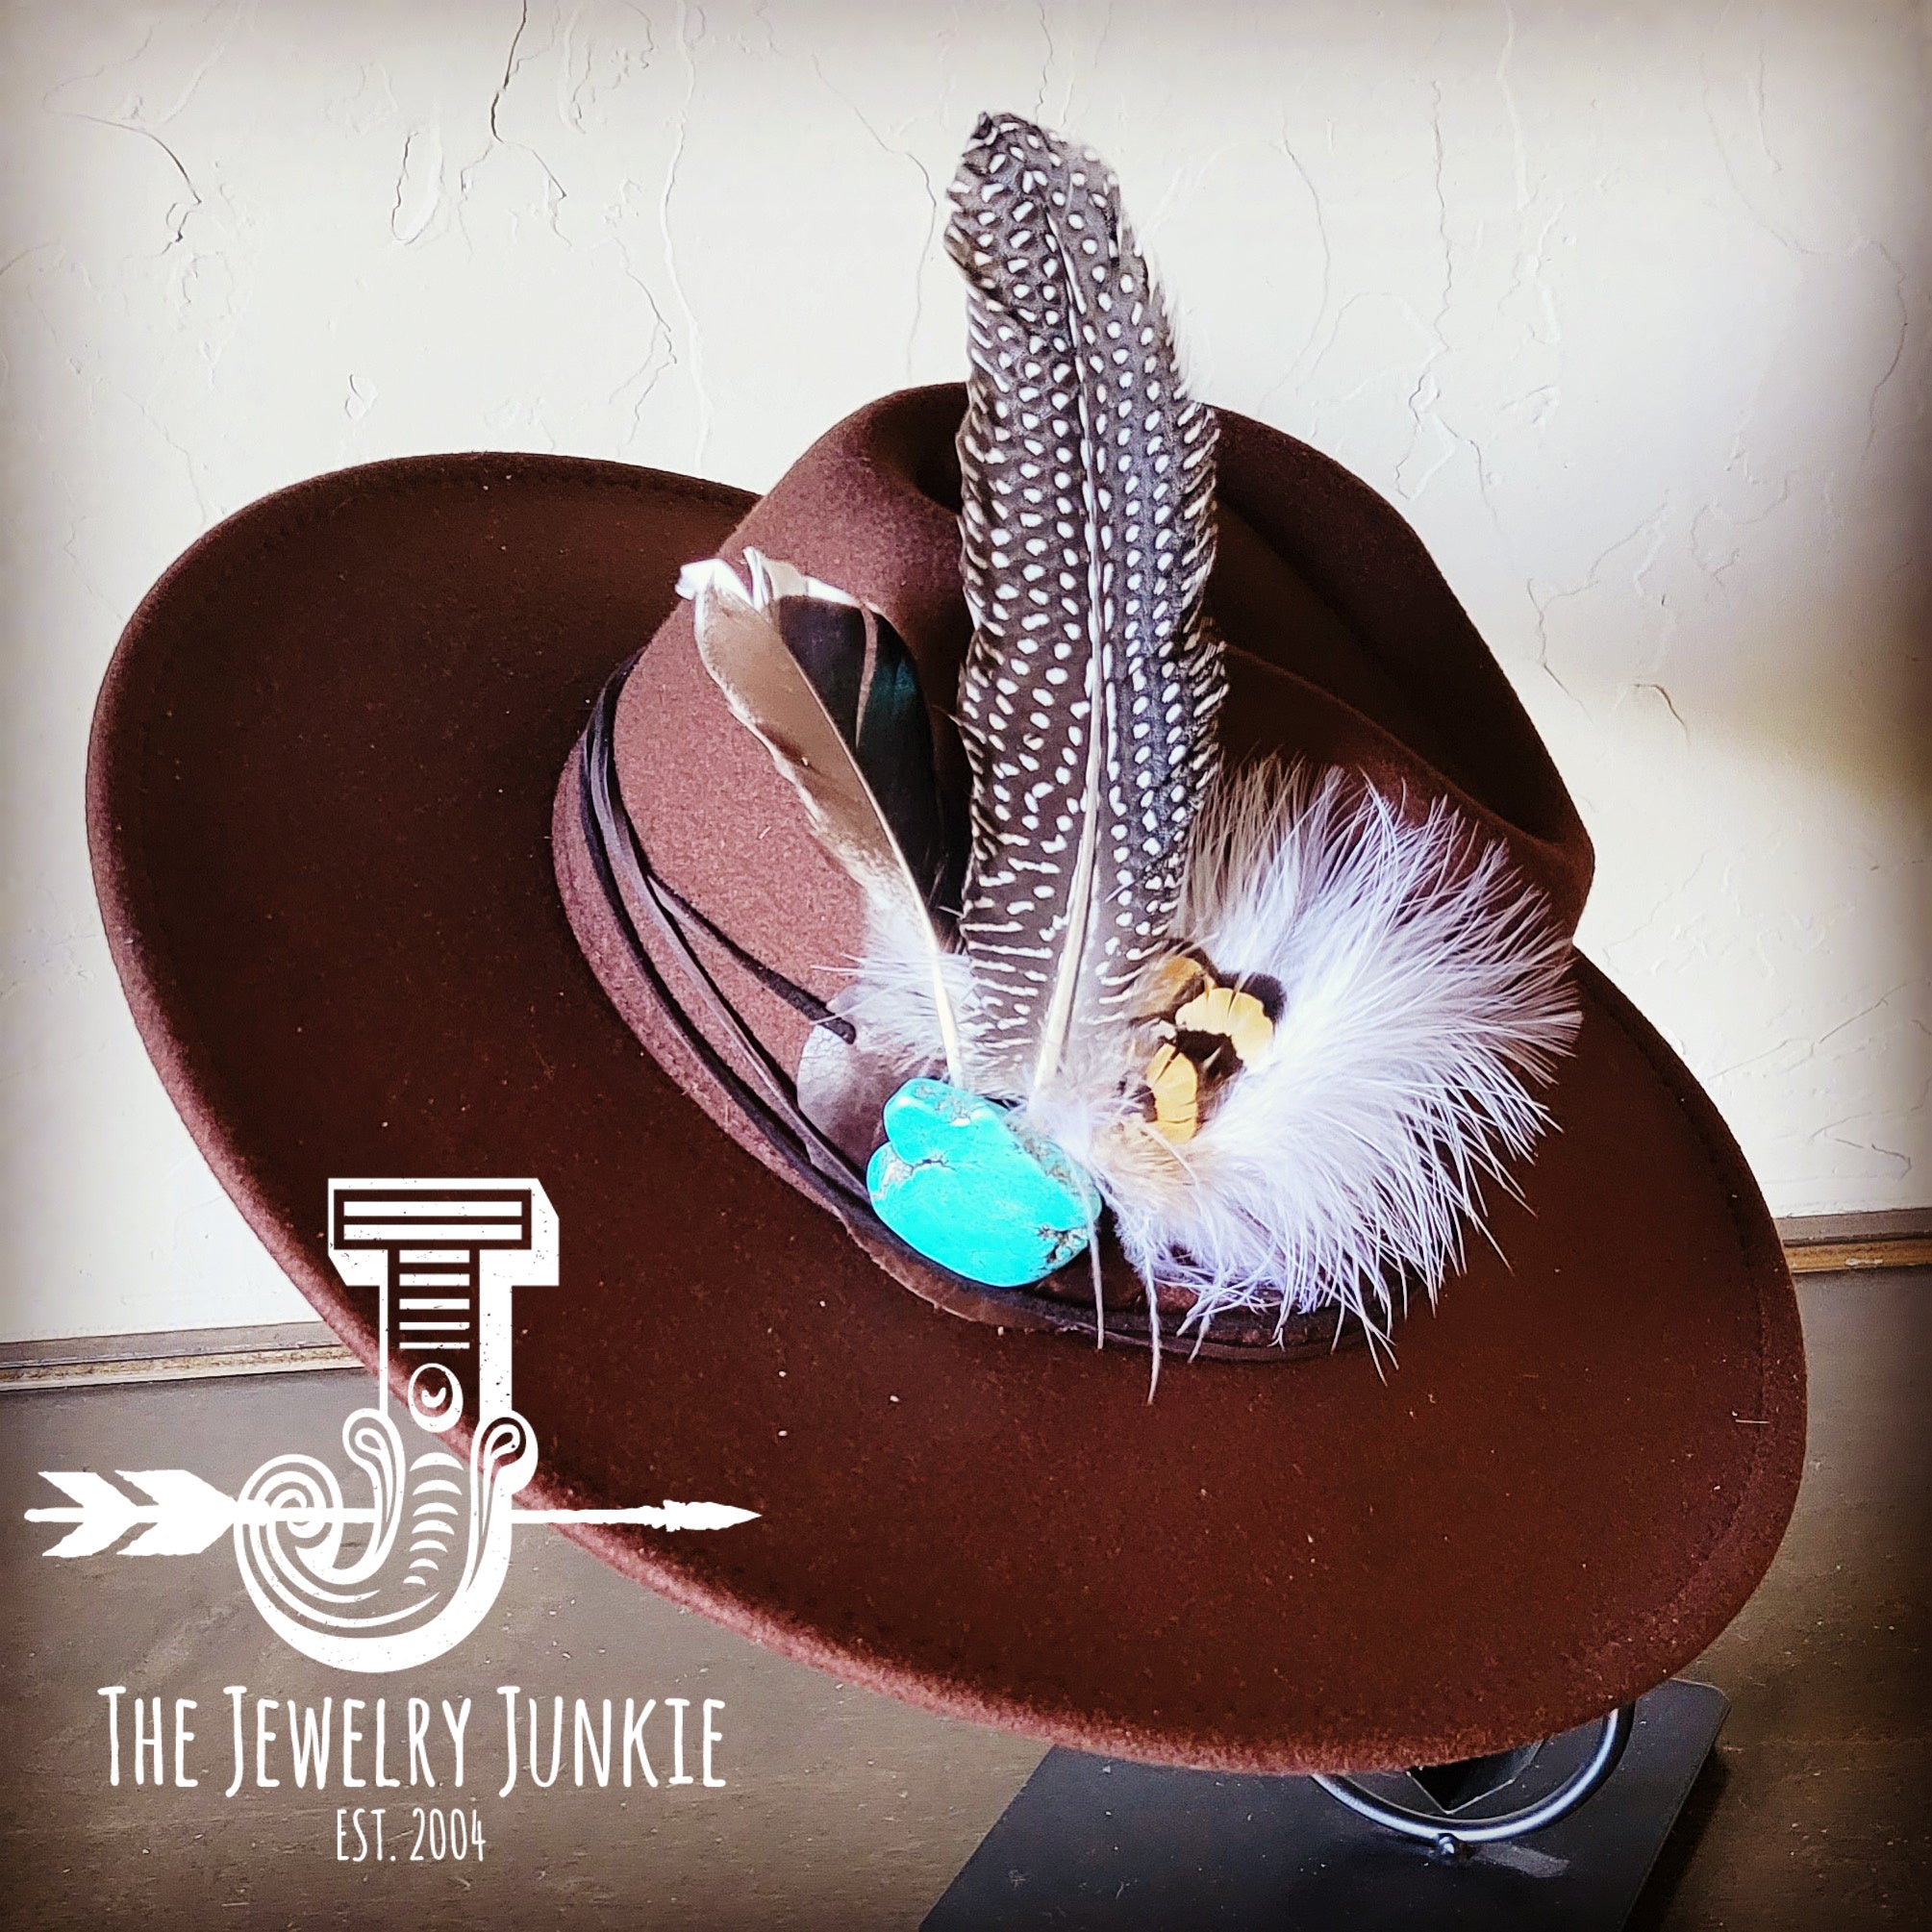 QuneusHot 8 Piece Cowboy Leather Hat Band Natural Hat Feathers Long Horn Turquoise Hatbands for Western Fedora Pork Pie Hats Men Women